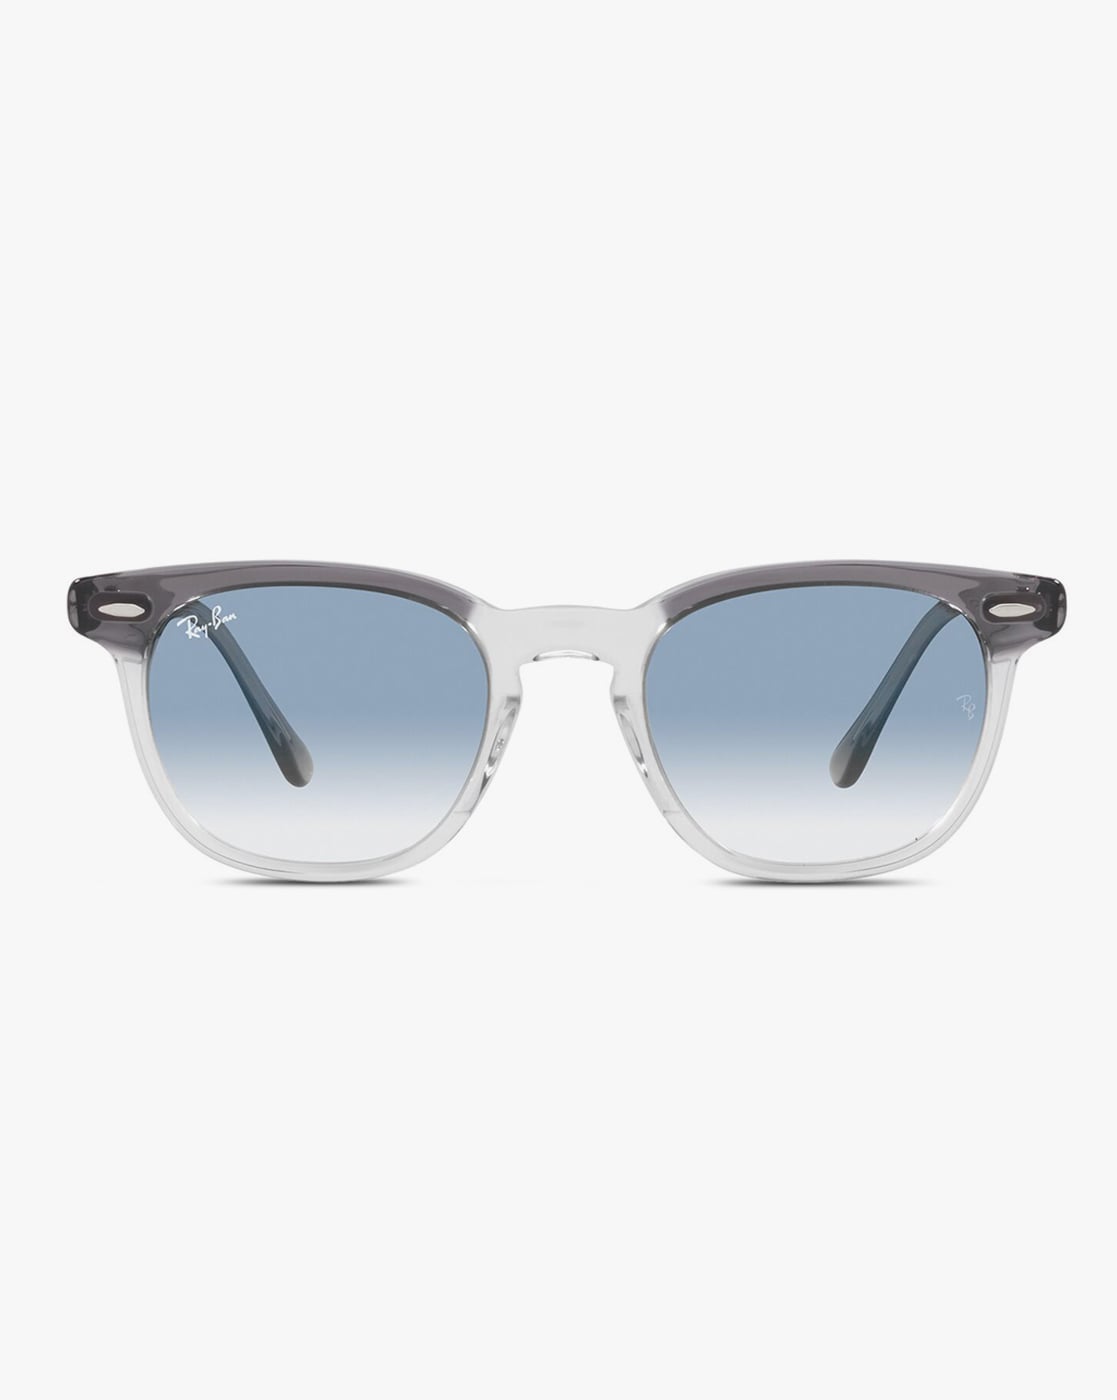 Sunglasses Ray Ban Classic Style I Oval Ray-Ban Sunglasses B&L